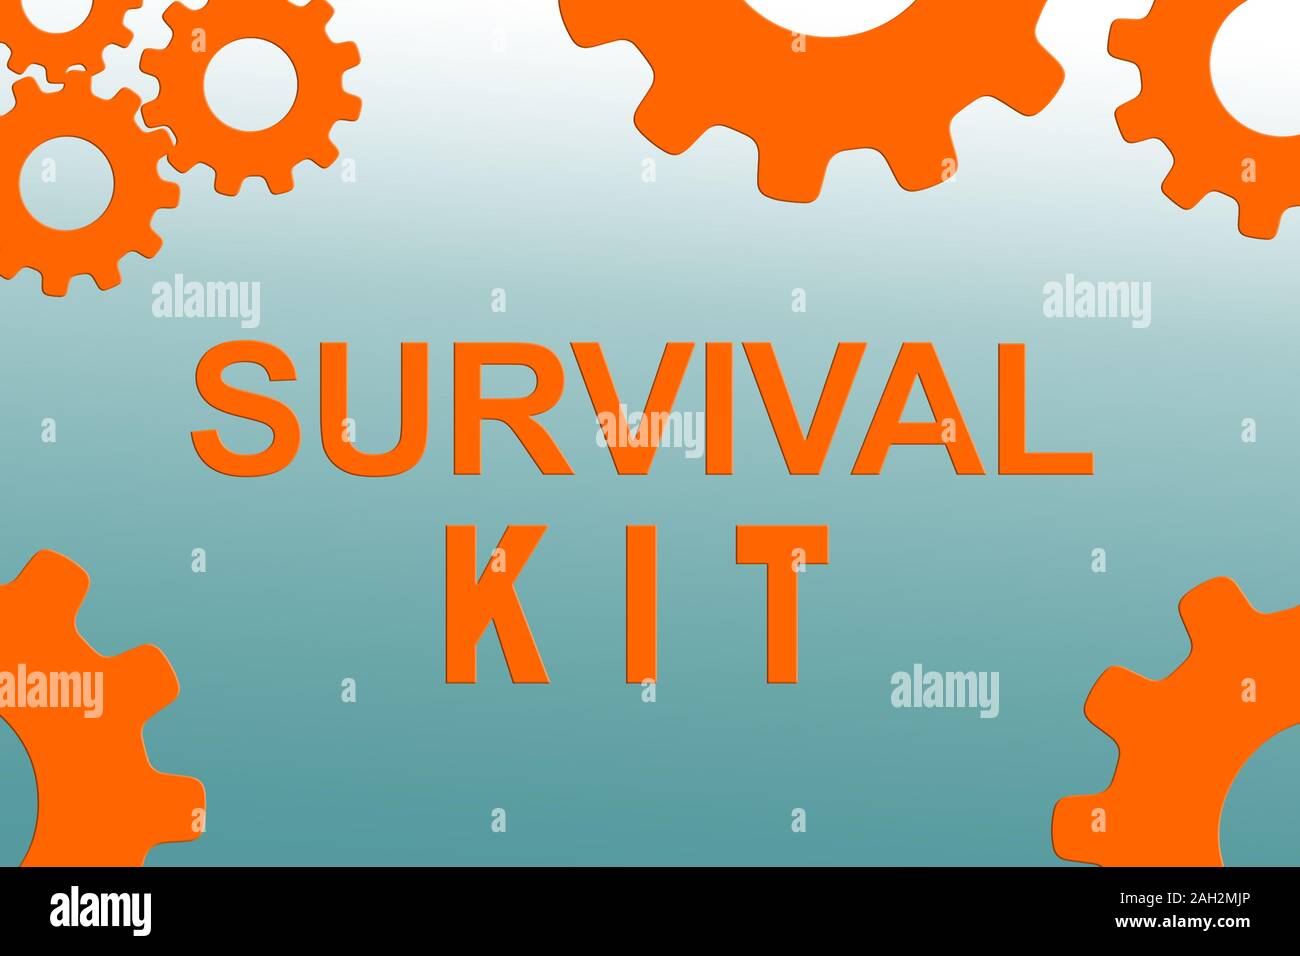 SURVIVAL KIT sign concept illustration with orange gear wheel figures on pale blue gradient background Stock Photo